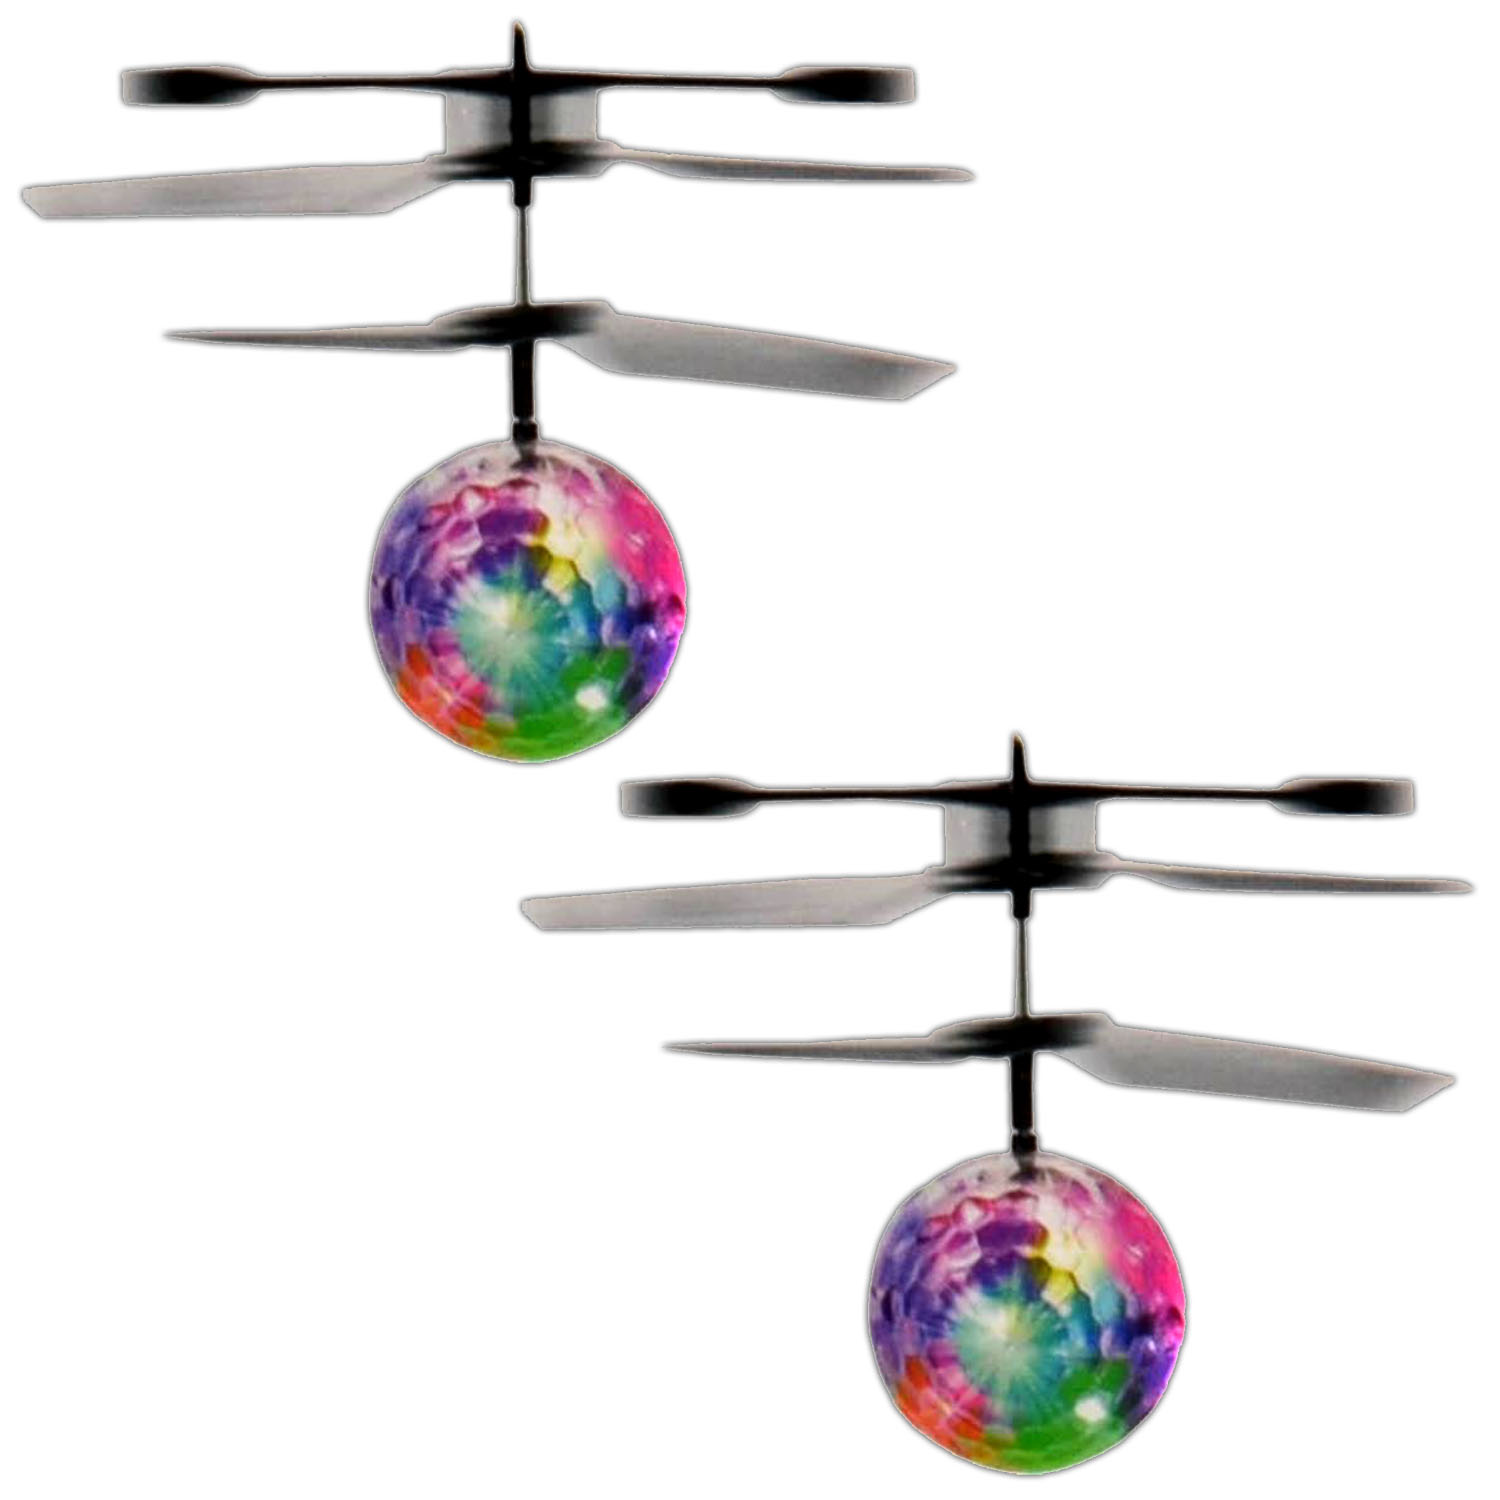 Infrarot LED Fliegender Heli BallSensor Hubschrauber KugelKinder Spielzeug 